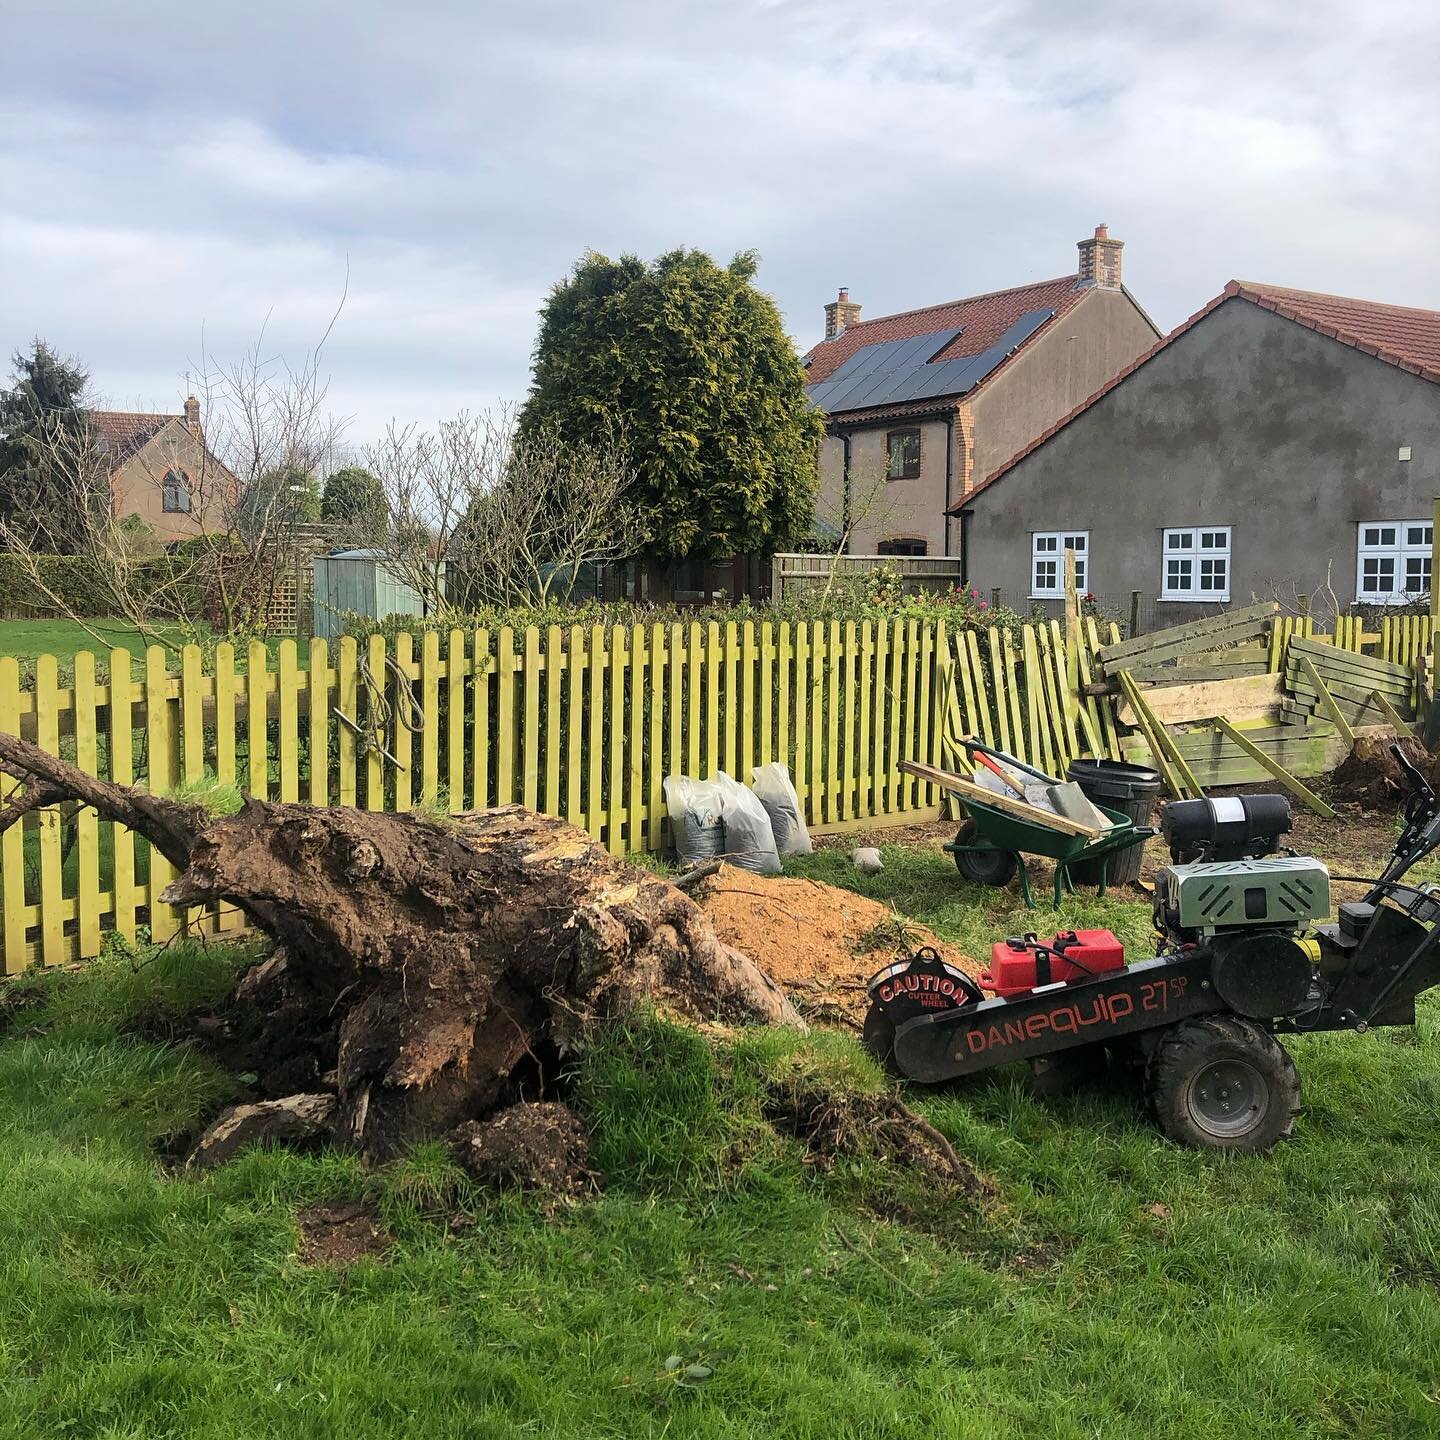 Removal of a large stump from a storm damaged eucalyptus.
.
.
.
.
.
#arborist #treesurgeon #arboristsofinstagram #arboriculture